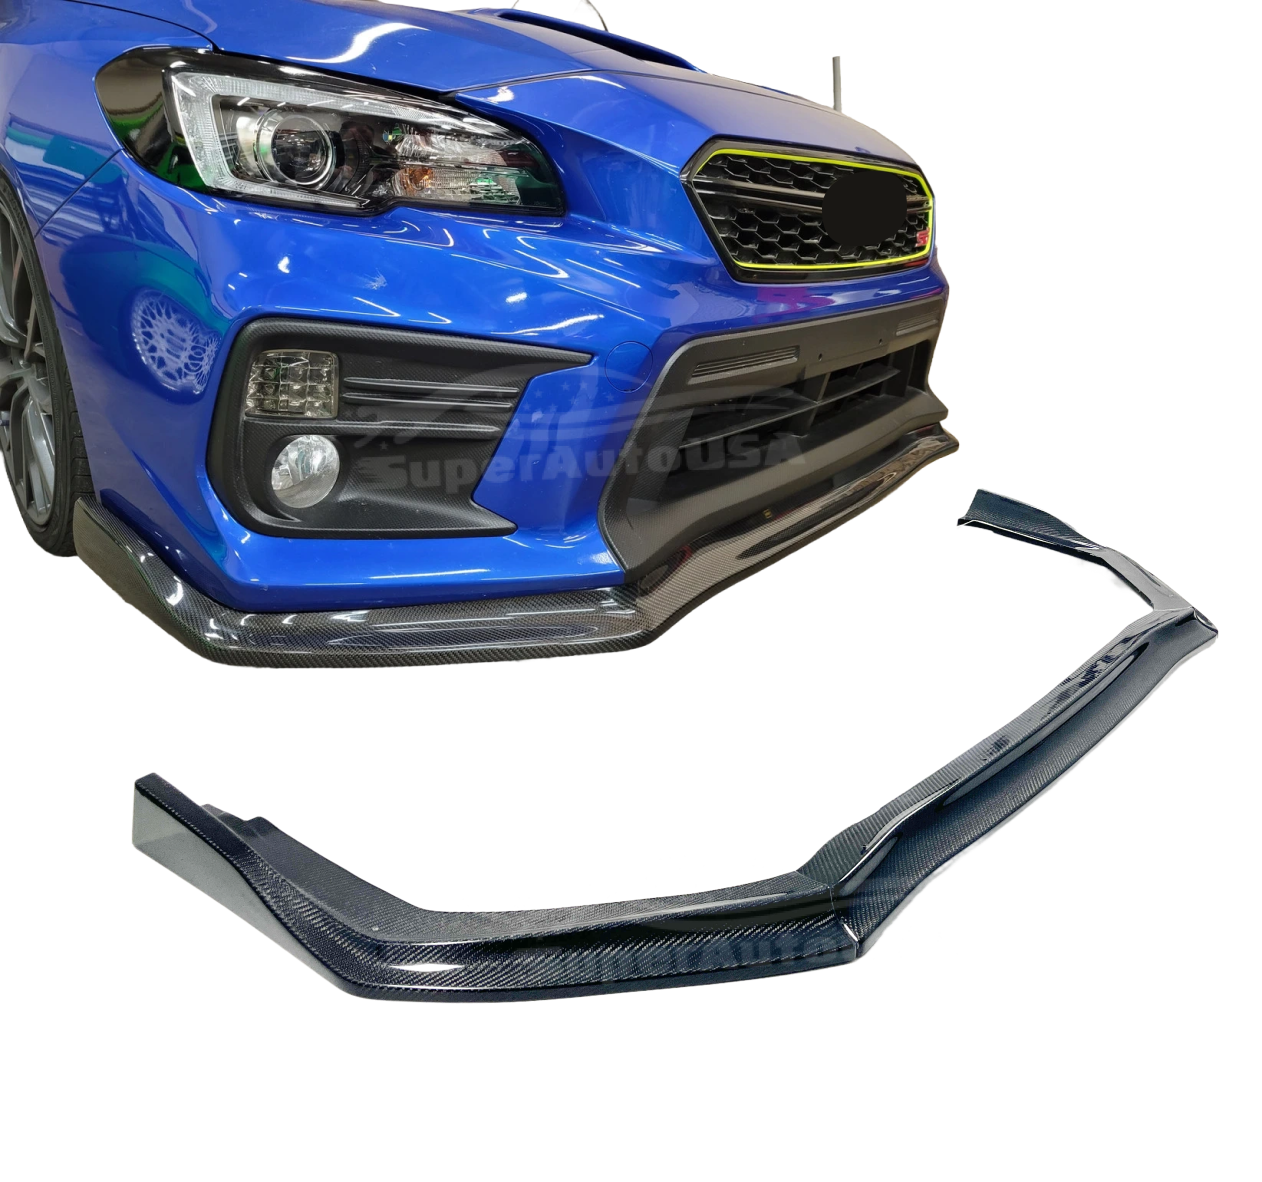 2017 Subaru WRX STI Real carbon fiber rear diffuser lip